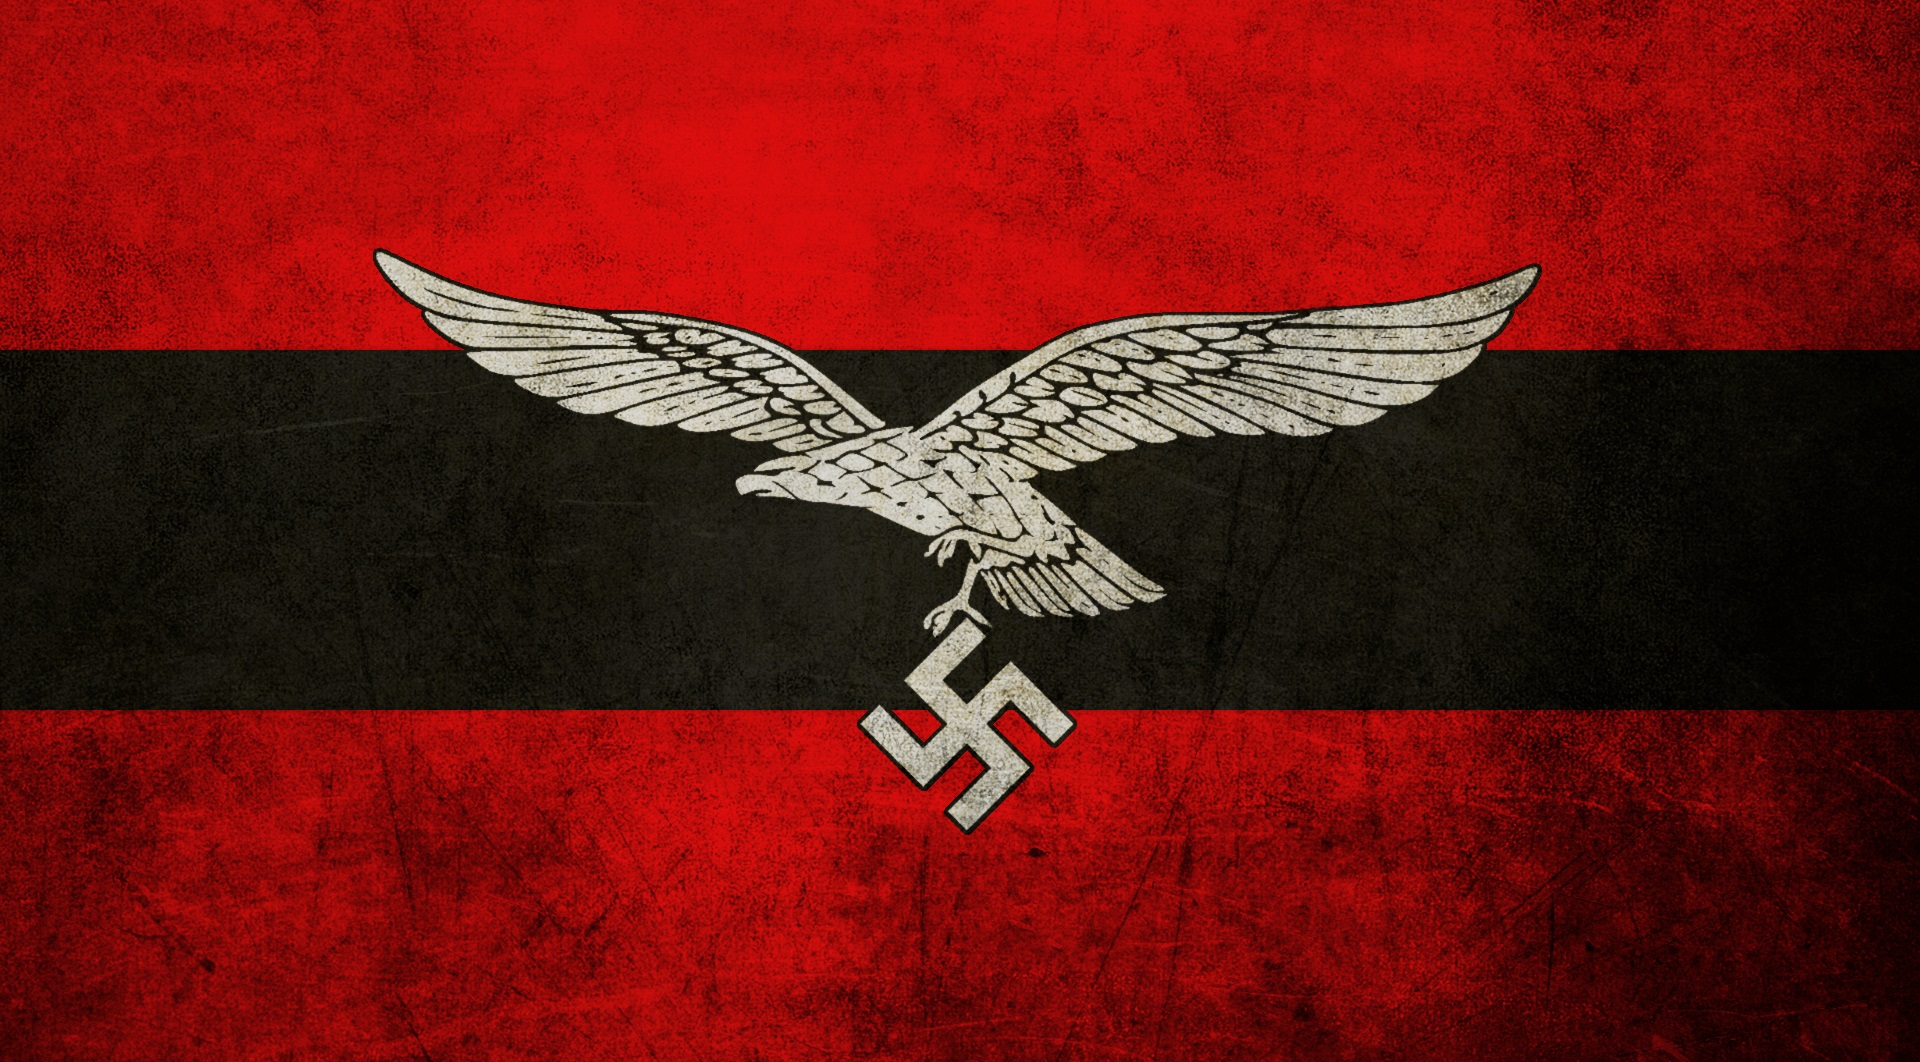 fascist wallpaper,red,eagle,wing,logo,emblem